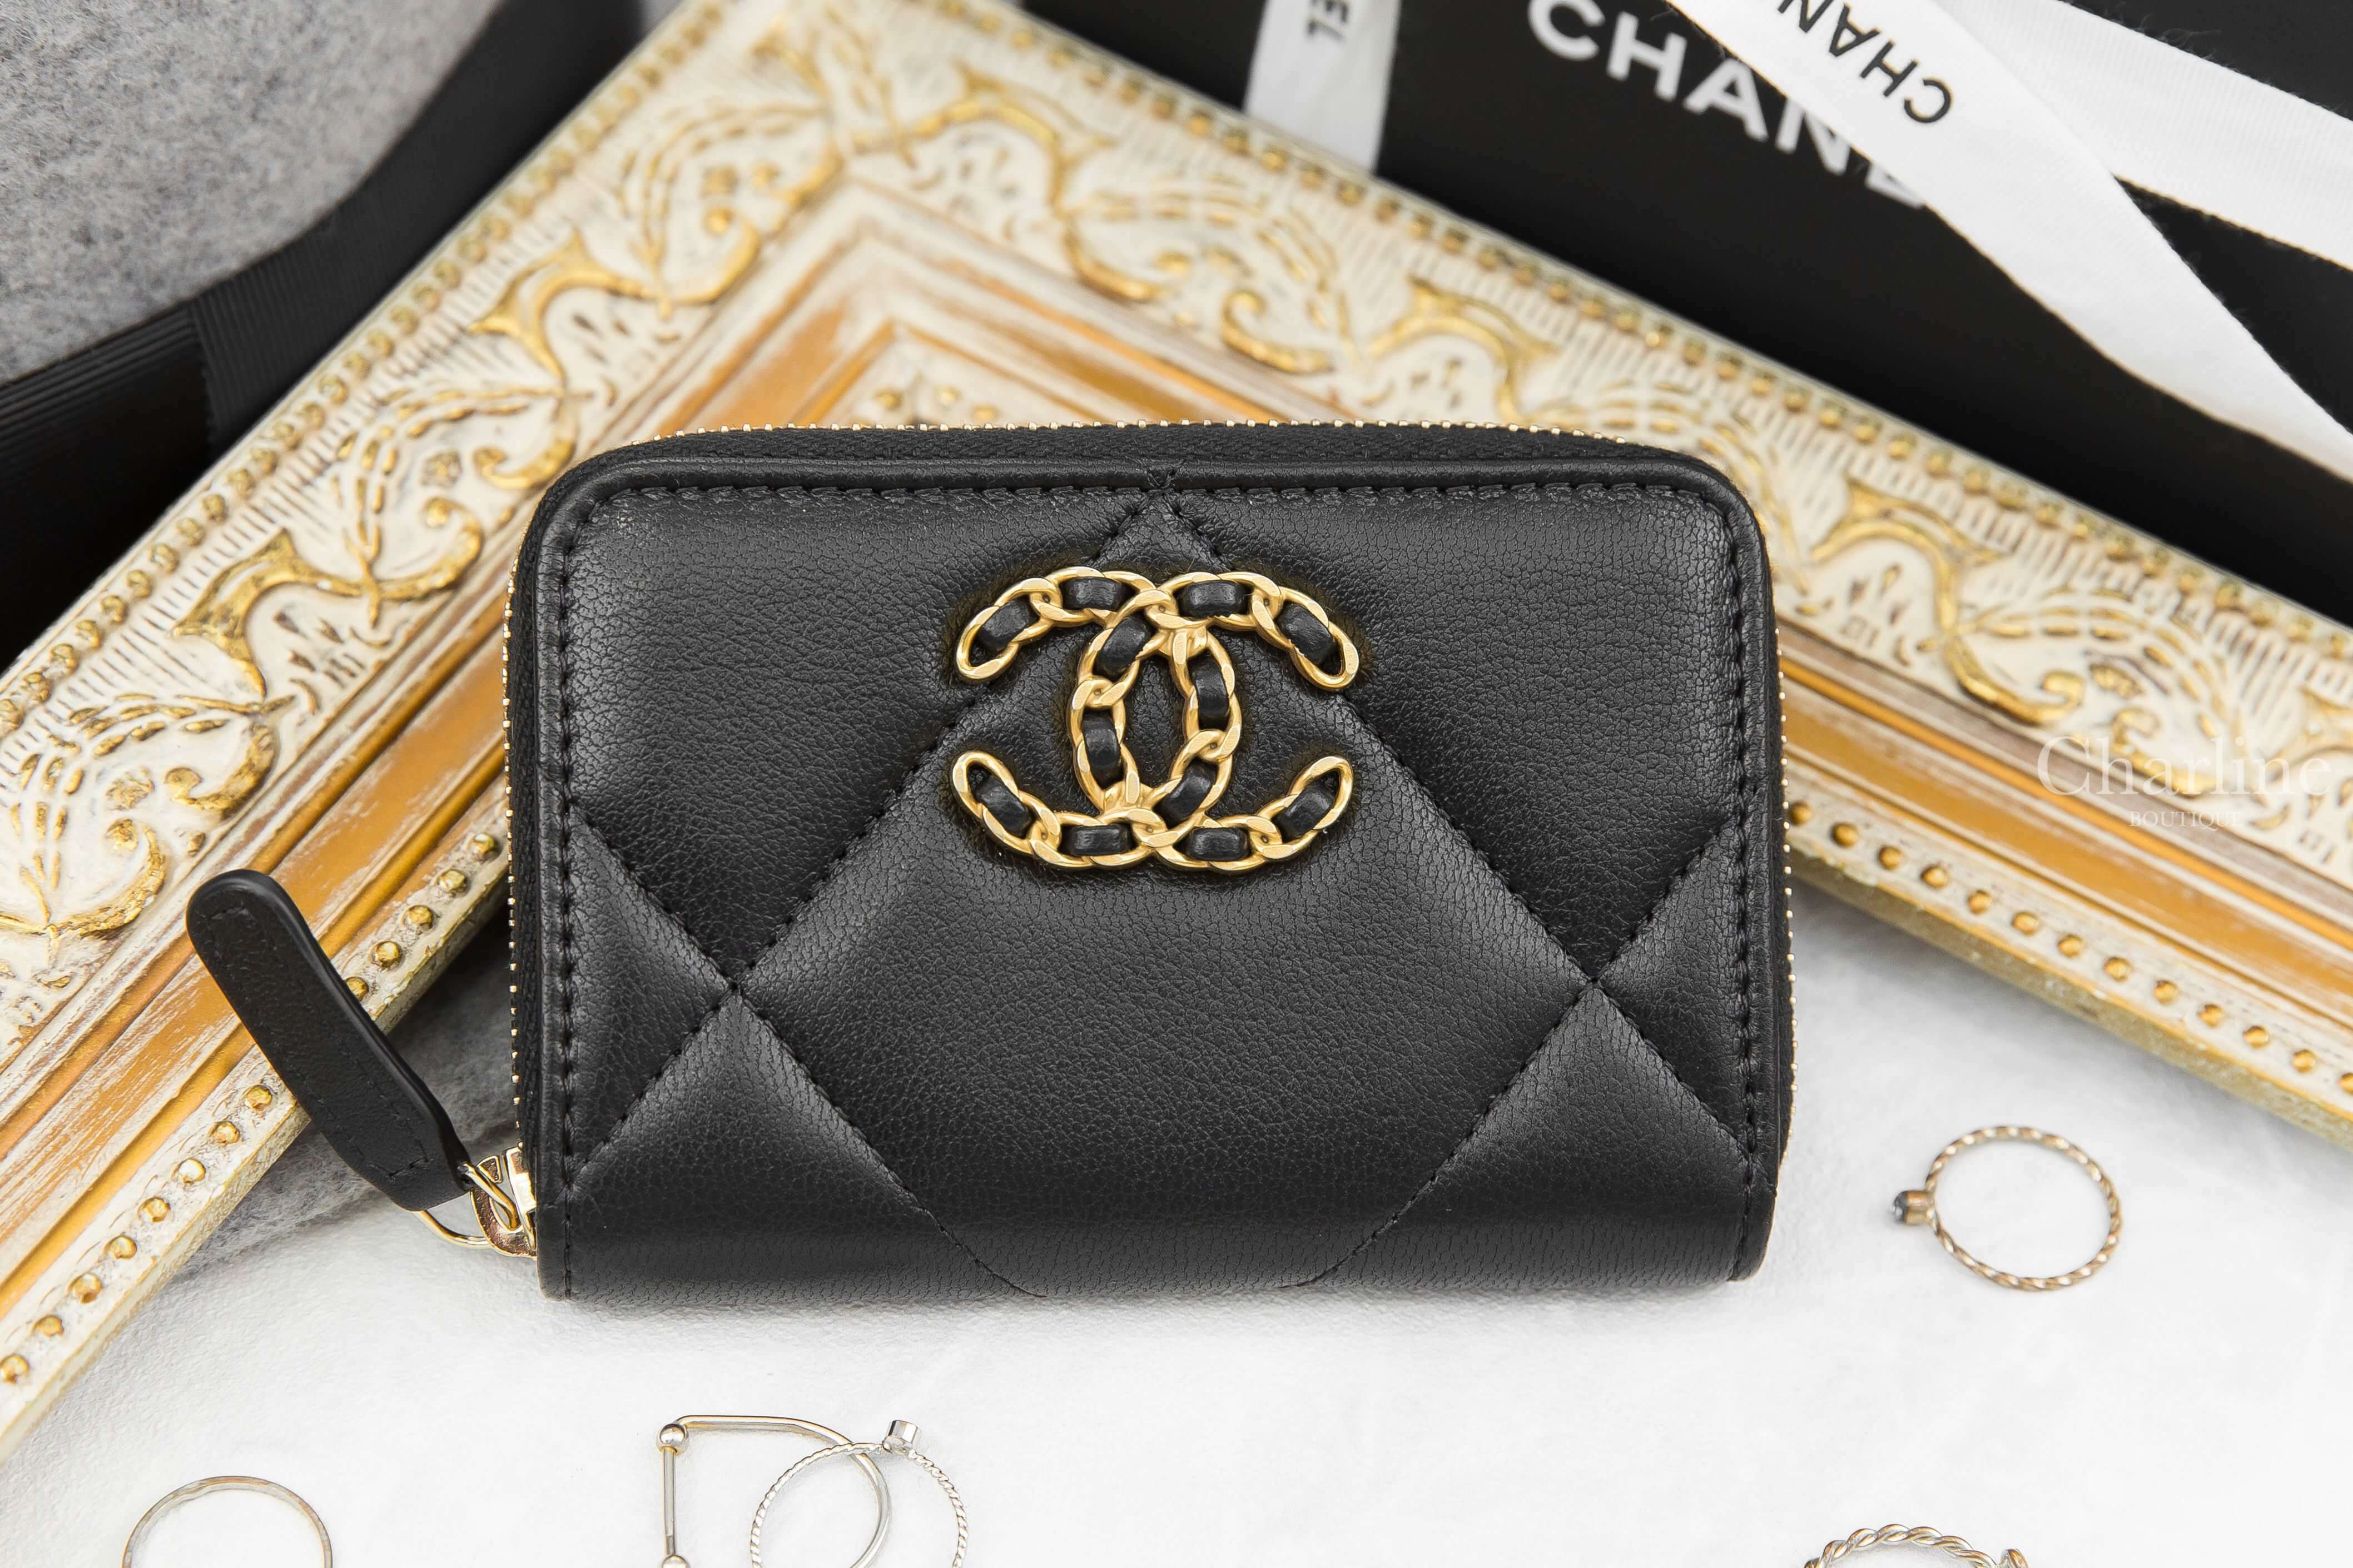 Chanel Chanel 19 Zipped Coin Purse 黑色金鍊帶CC酒紅內裡大菱格羊皮卡片拉鍊零錢夾